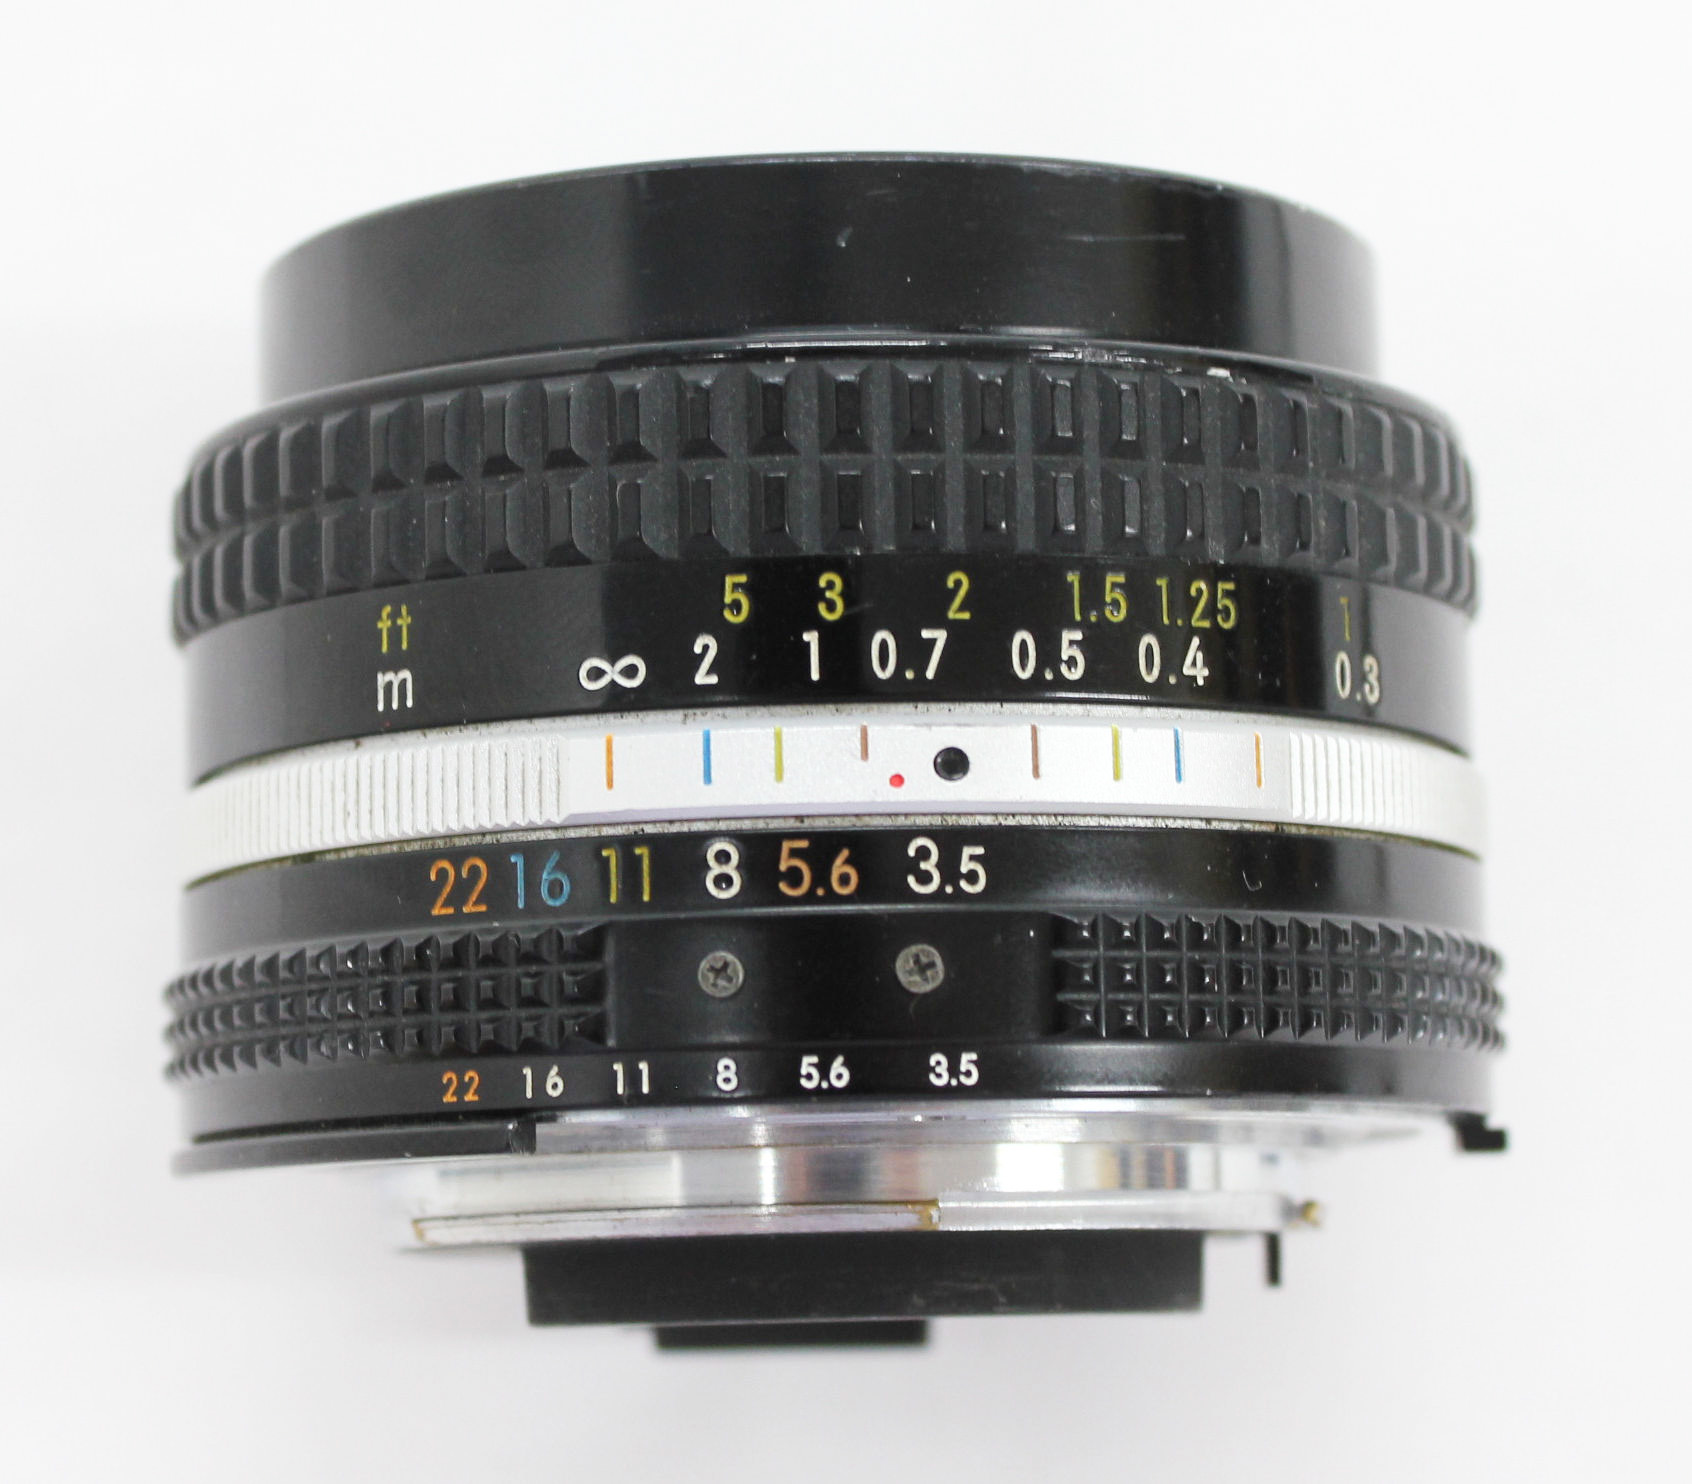  Nikon Ai-s Ais Nikkor 20mm F/3.5 Wide Angle MF Lens from Japan Photo 3